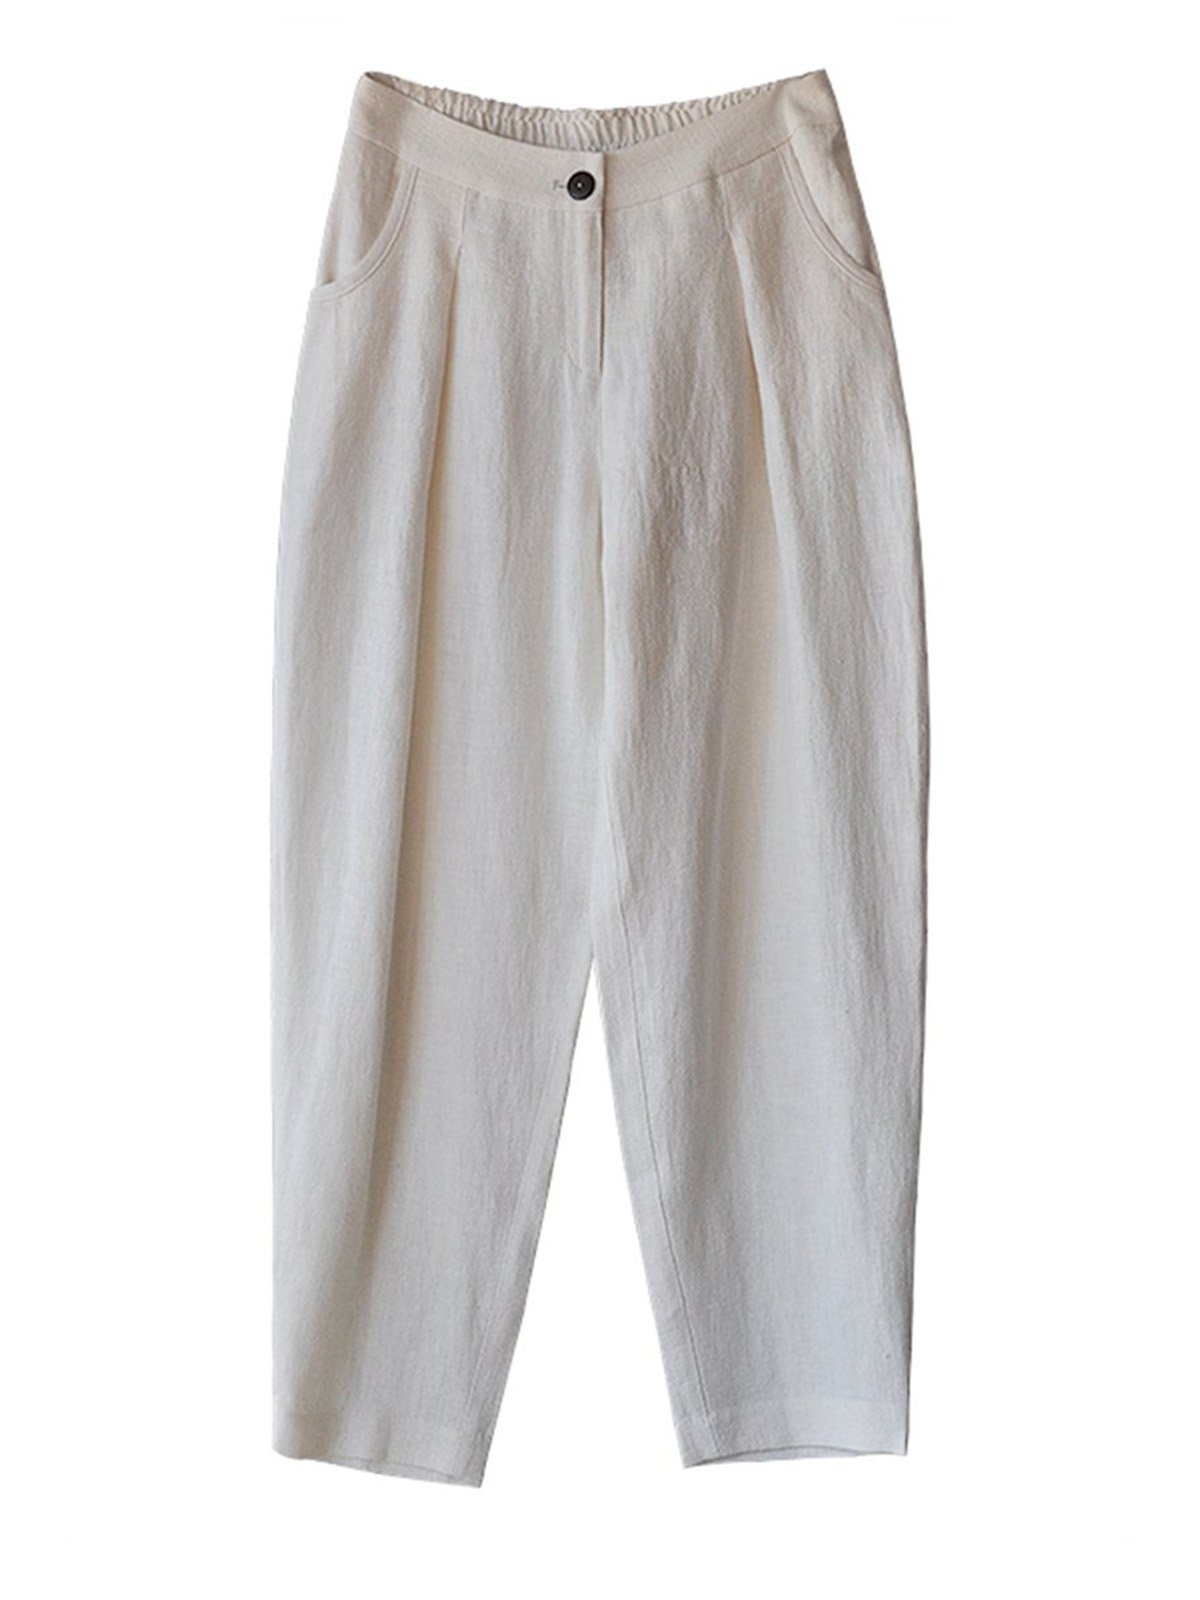 Women Long Cotton Pencil Pants Trousers